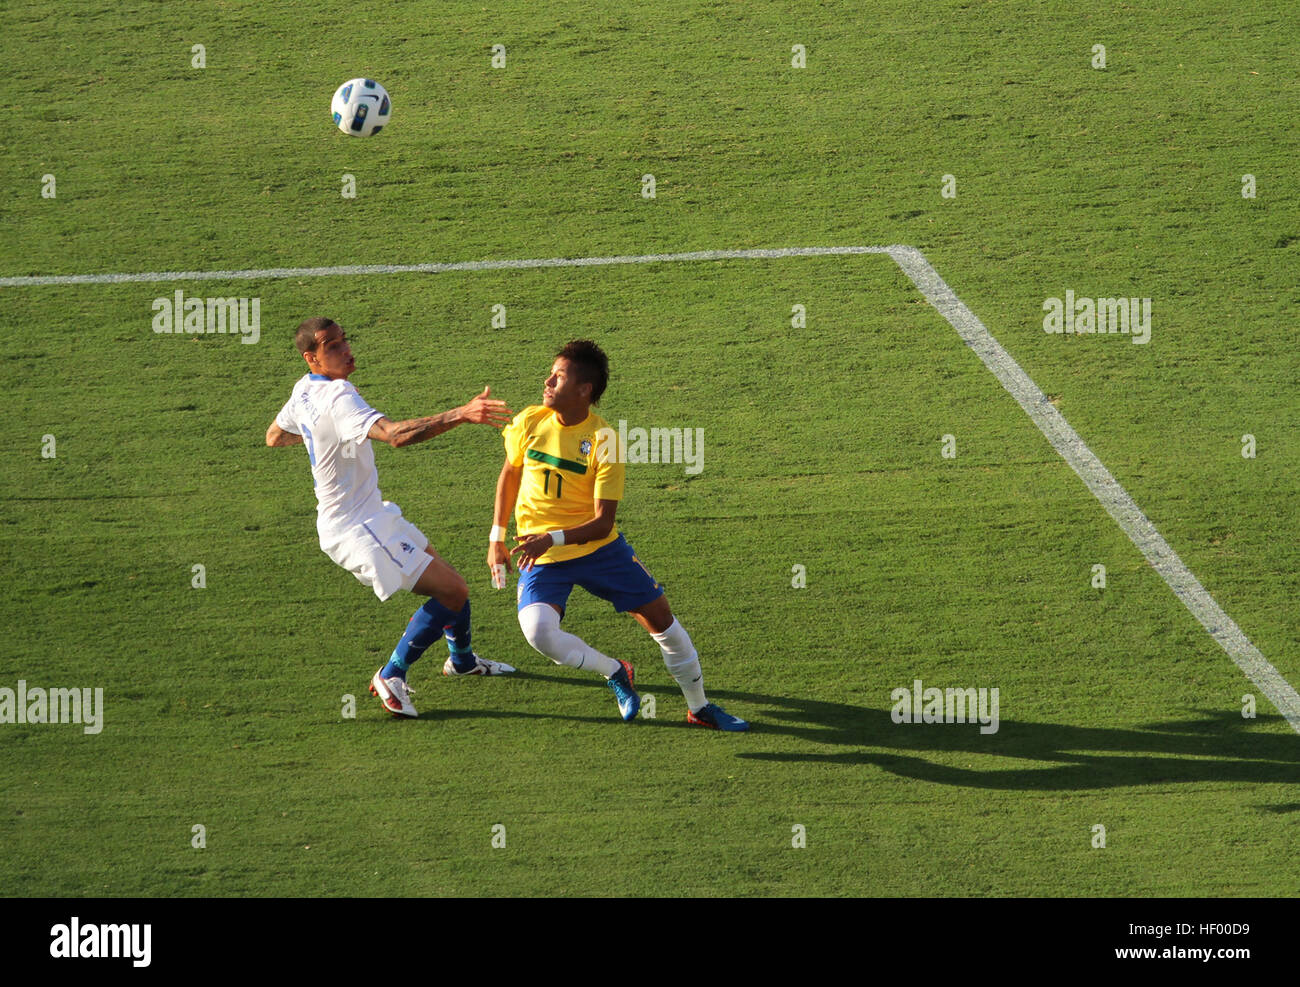 Neymar applying a overhead dribble on an opponent Stock Photo